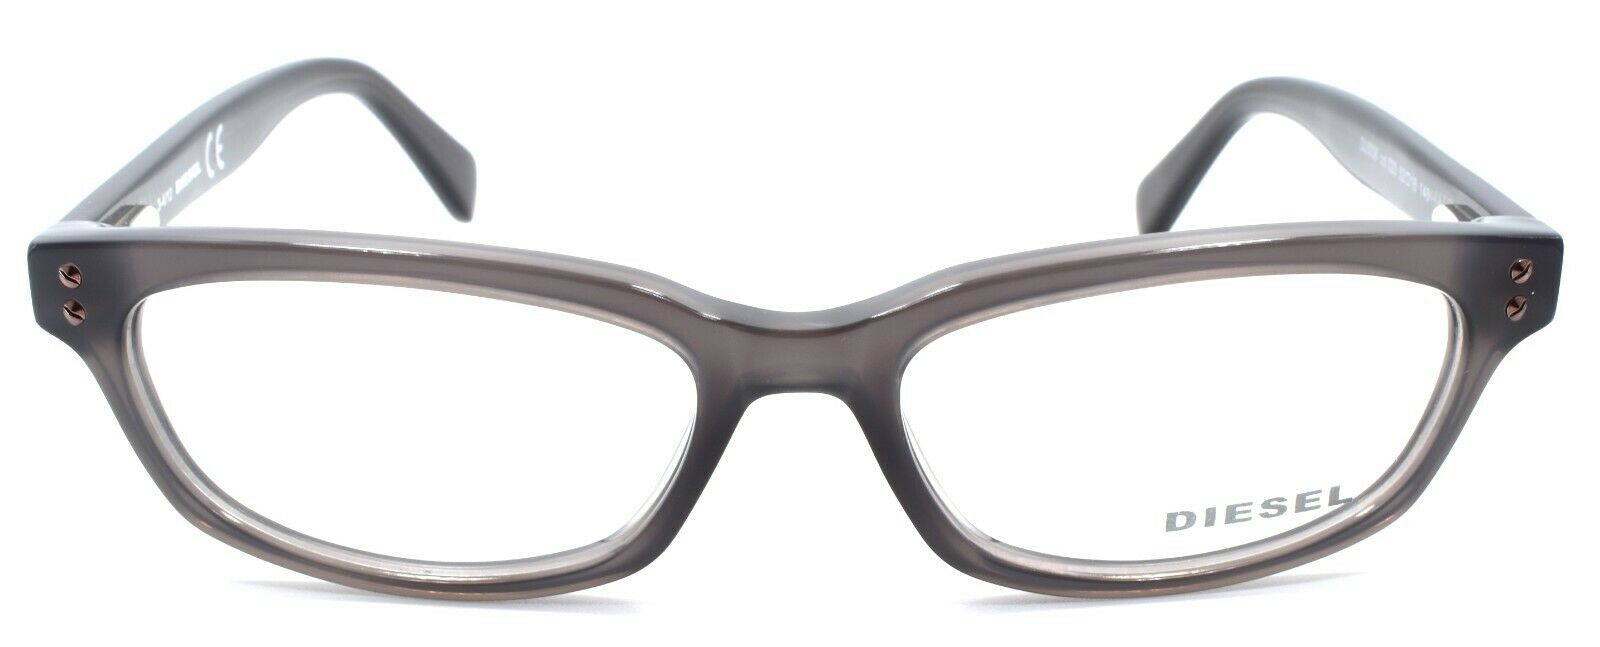 2-Diesel DL5038 020 Women's Eyeglasses Frames 52-16-140 Opal Dark Grey-664689575138-IKSpecs